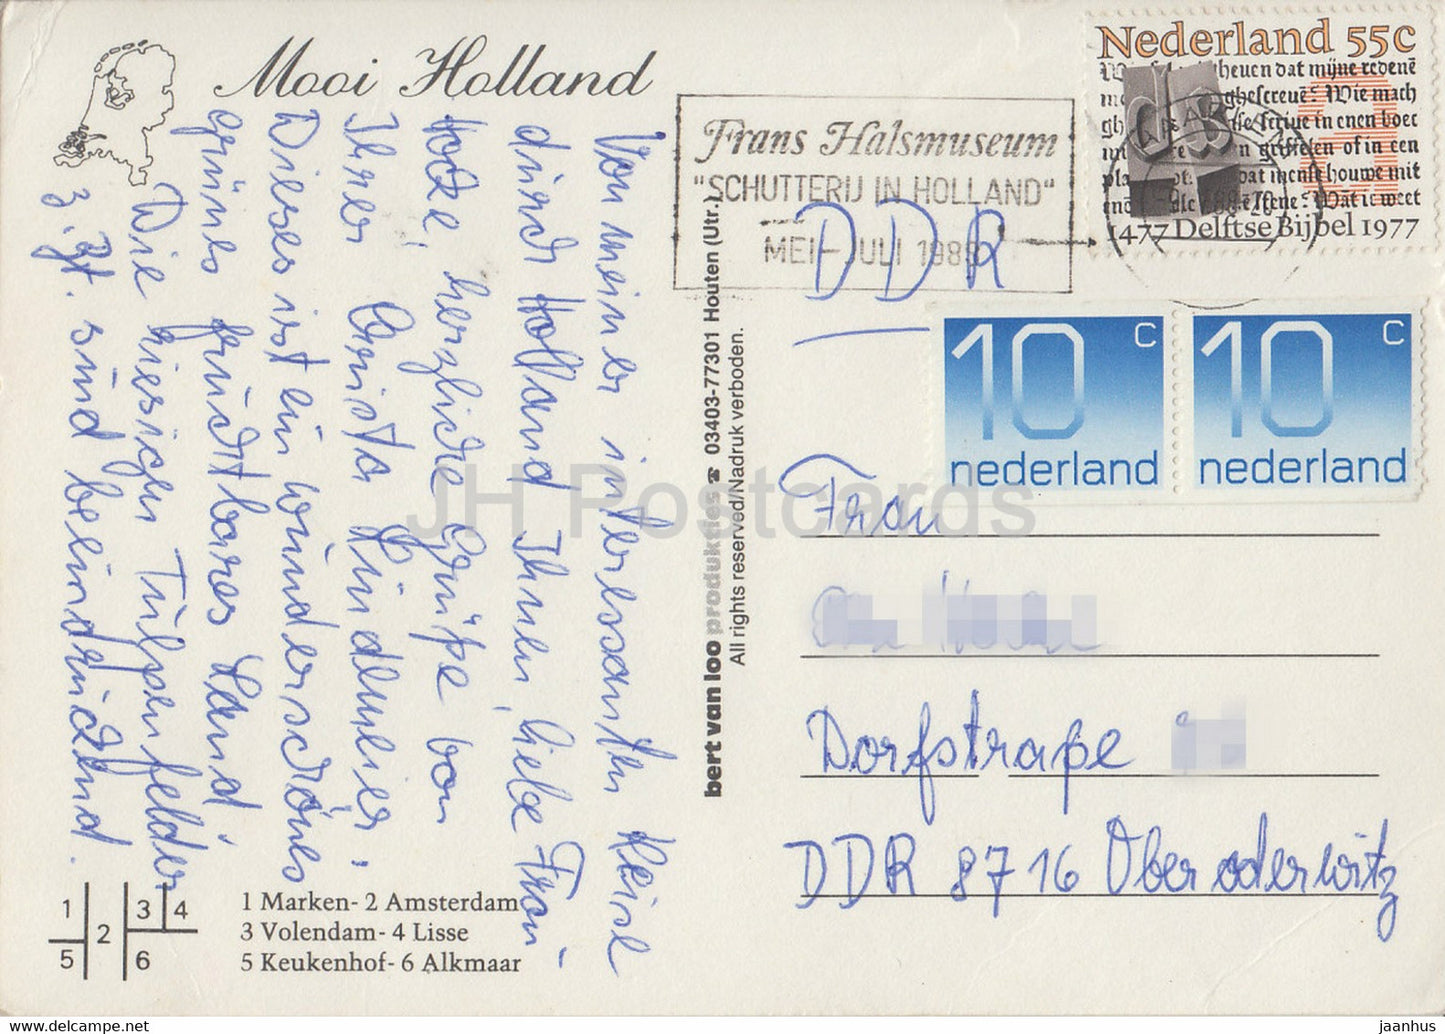 Mooi Holland - fromage - Amsterdam - Volendam - Lisse - Keukenhof - Costumes folkloriques - 1988 - Pays-Bas - d'occasion